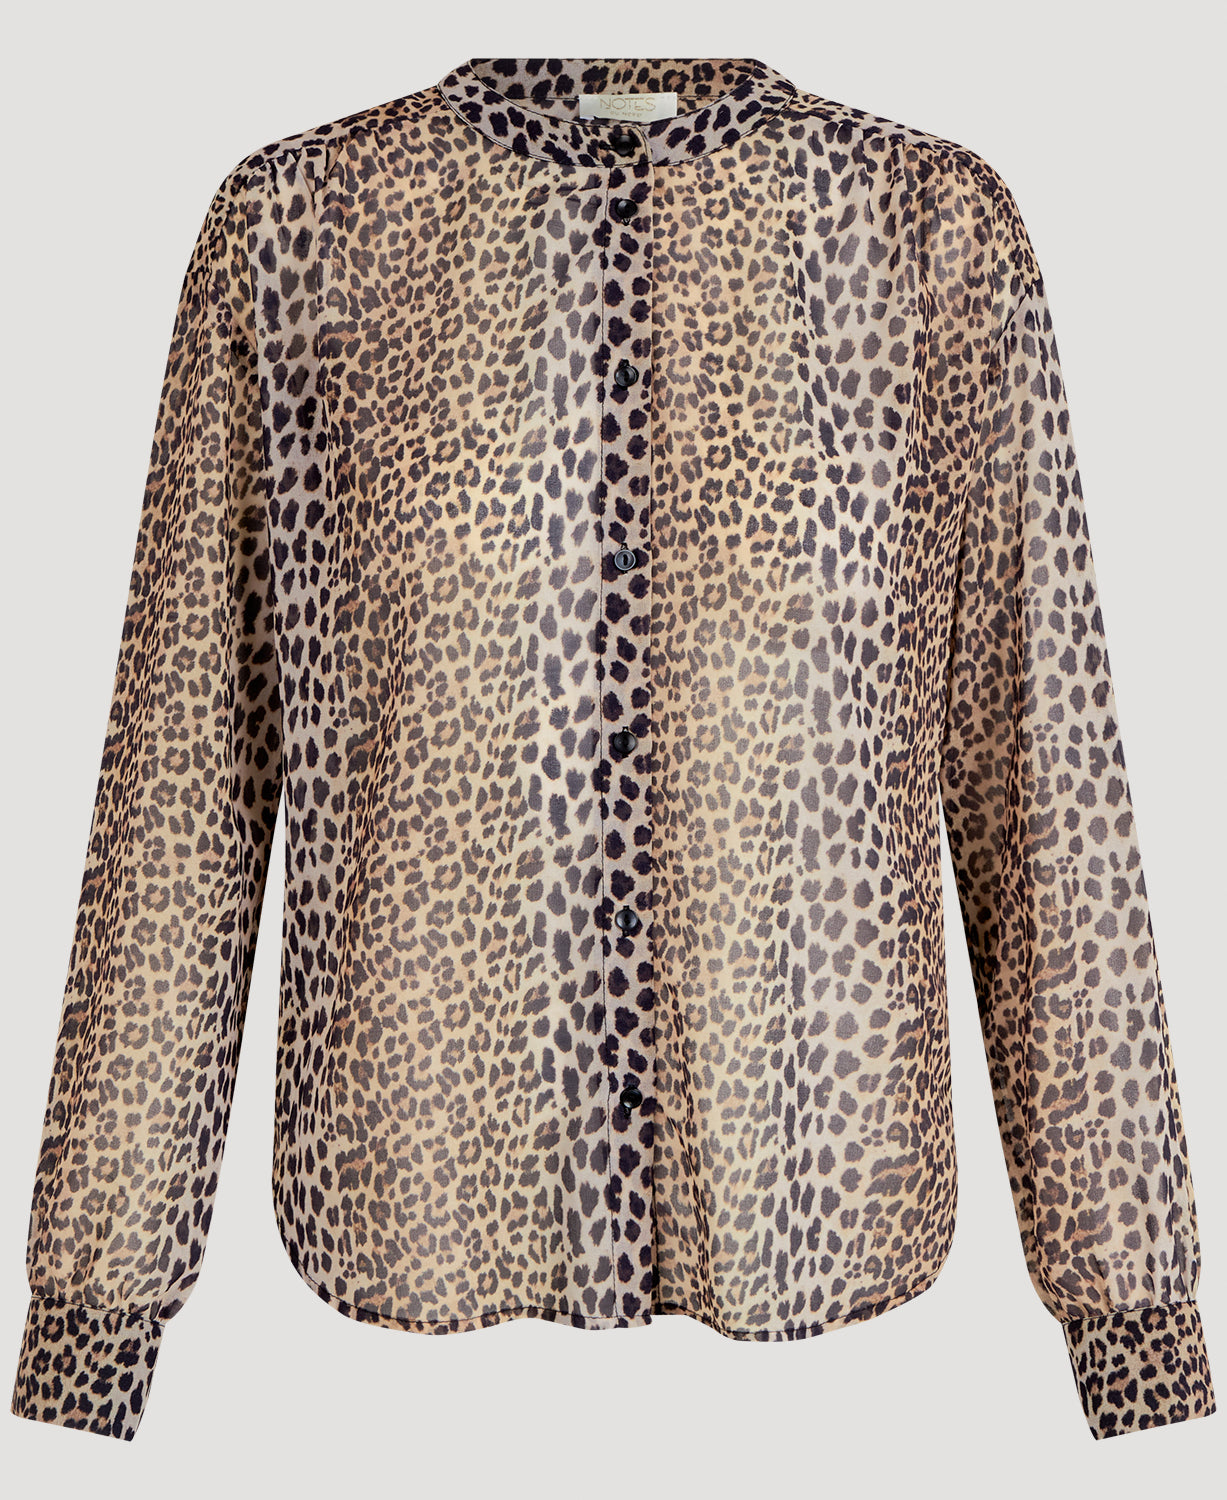 Fabiola Recycled Shirt - Leopard